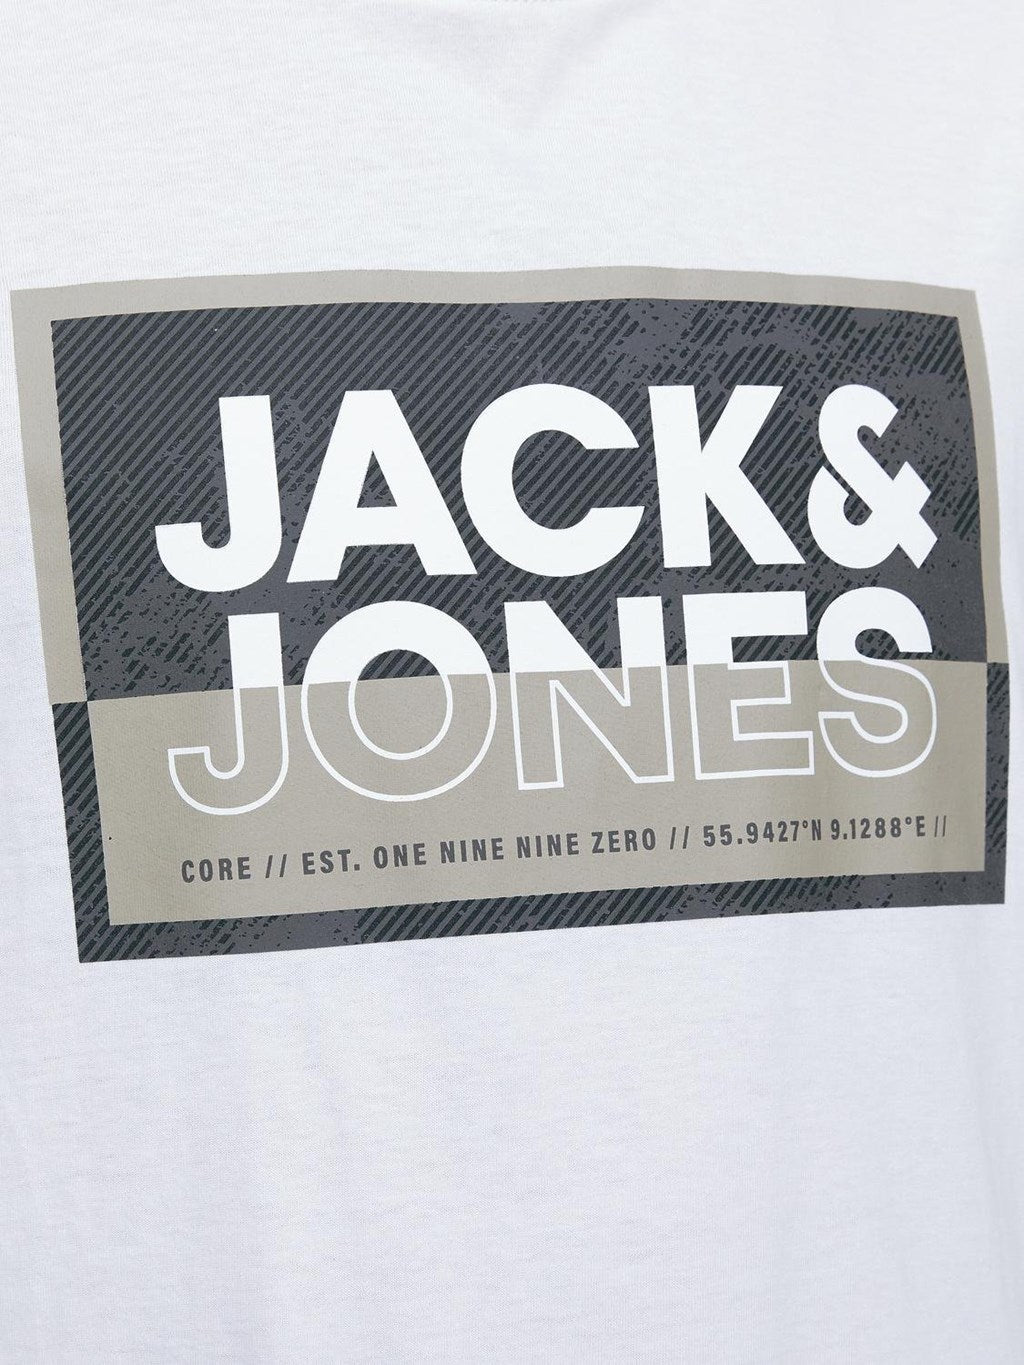 T-shirt blanc Jack & Jones Homme